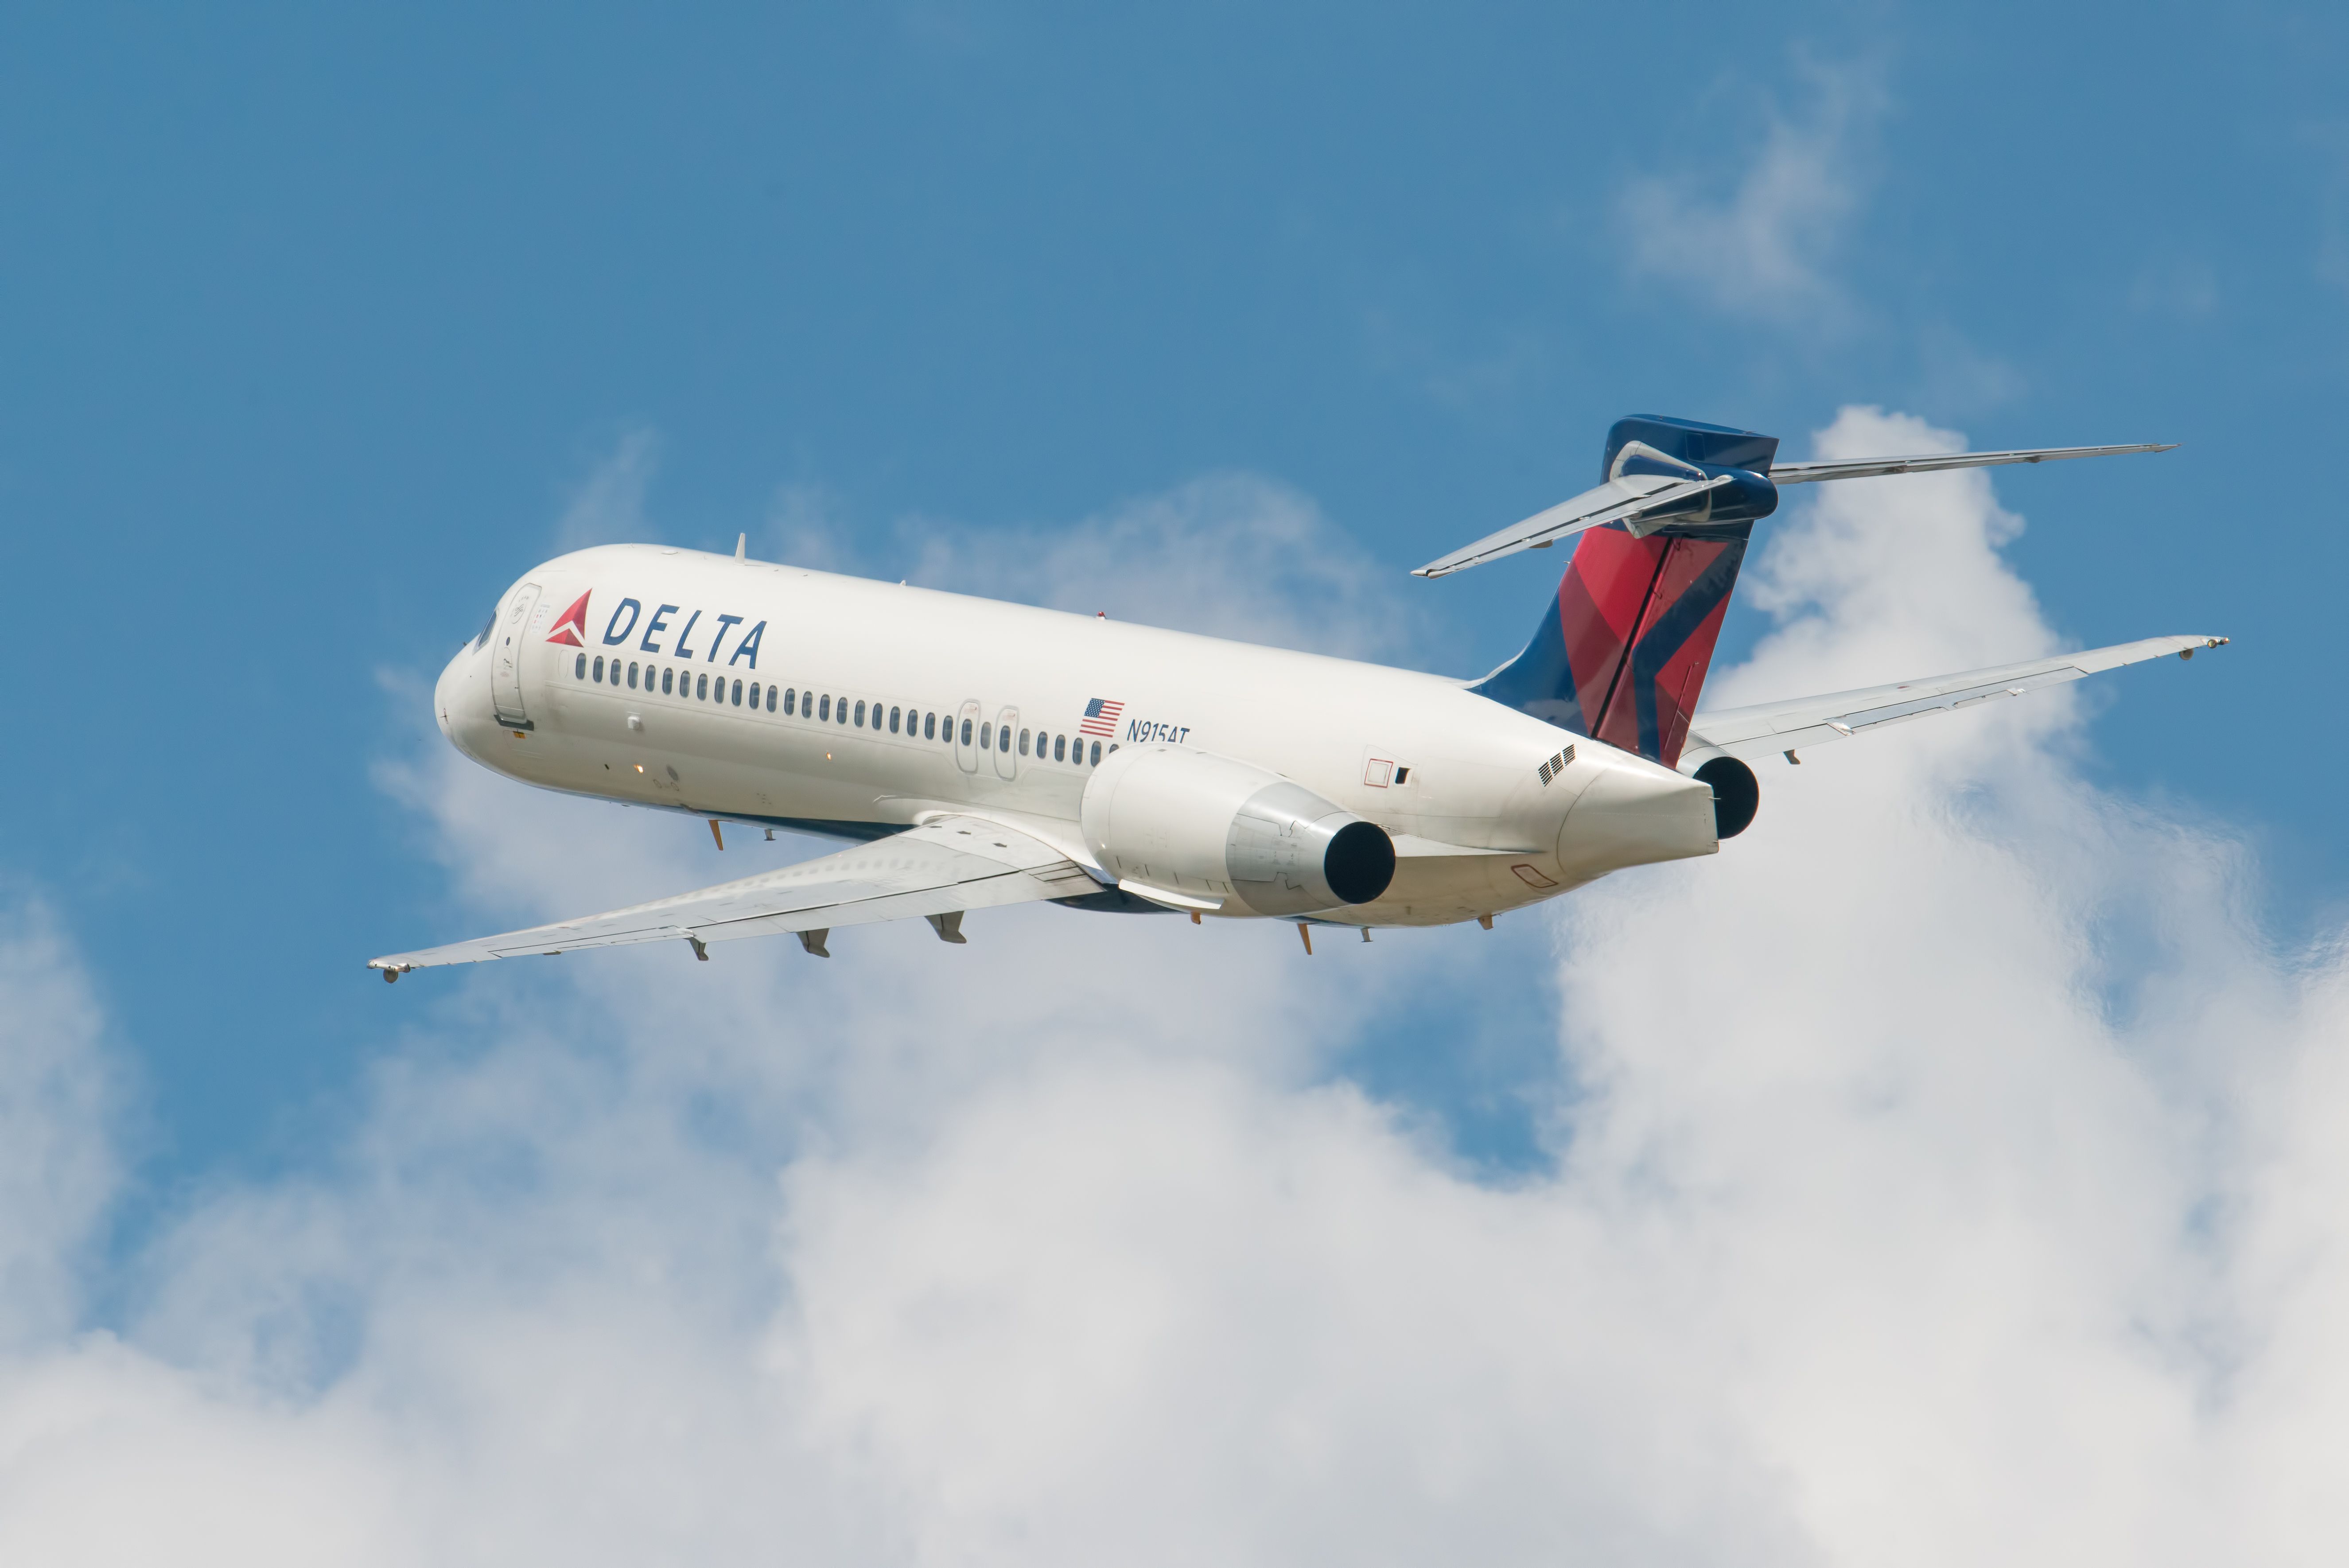 Delta Air Lines Boeing 717-200 departing. 